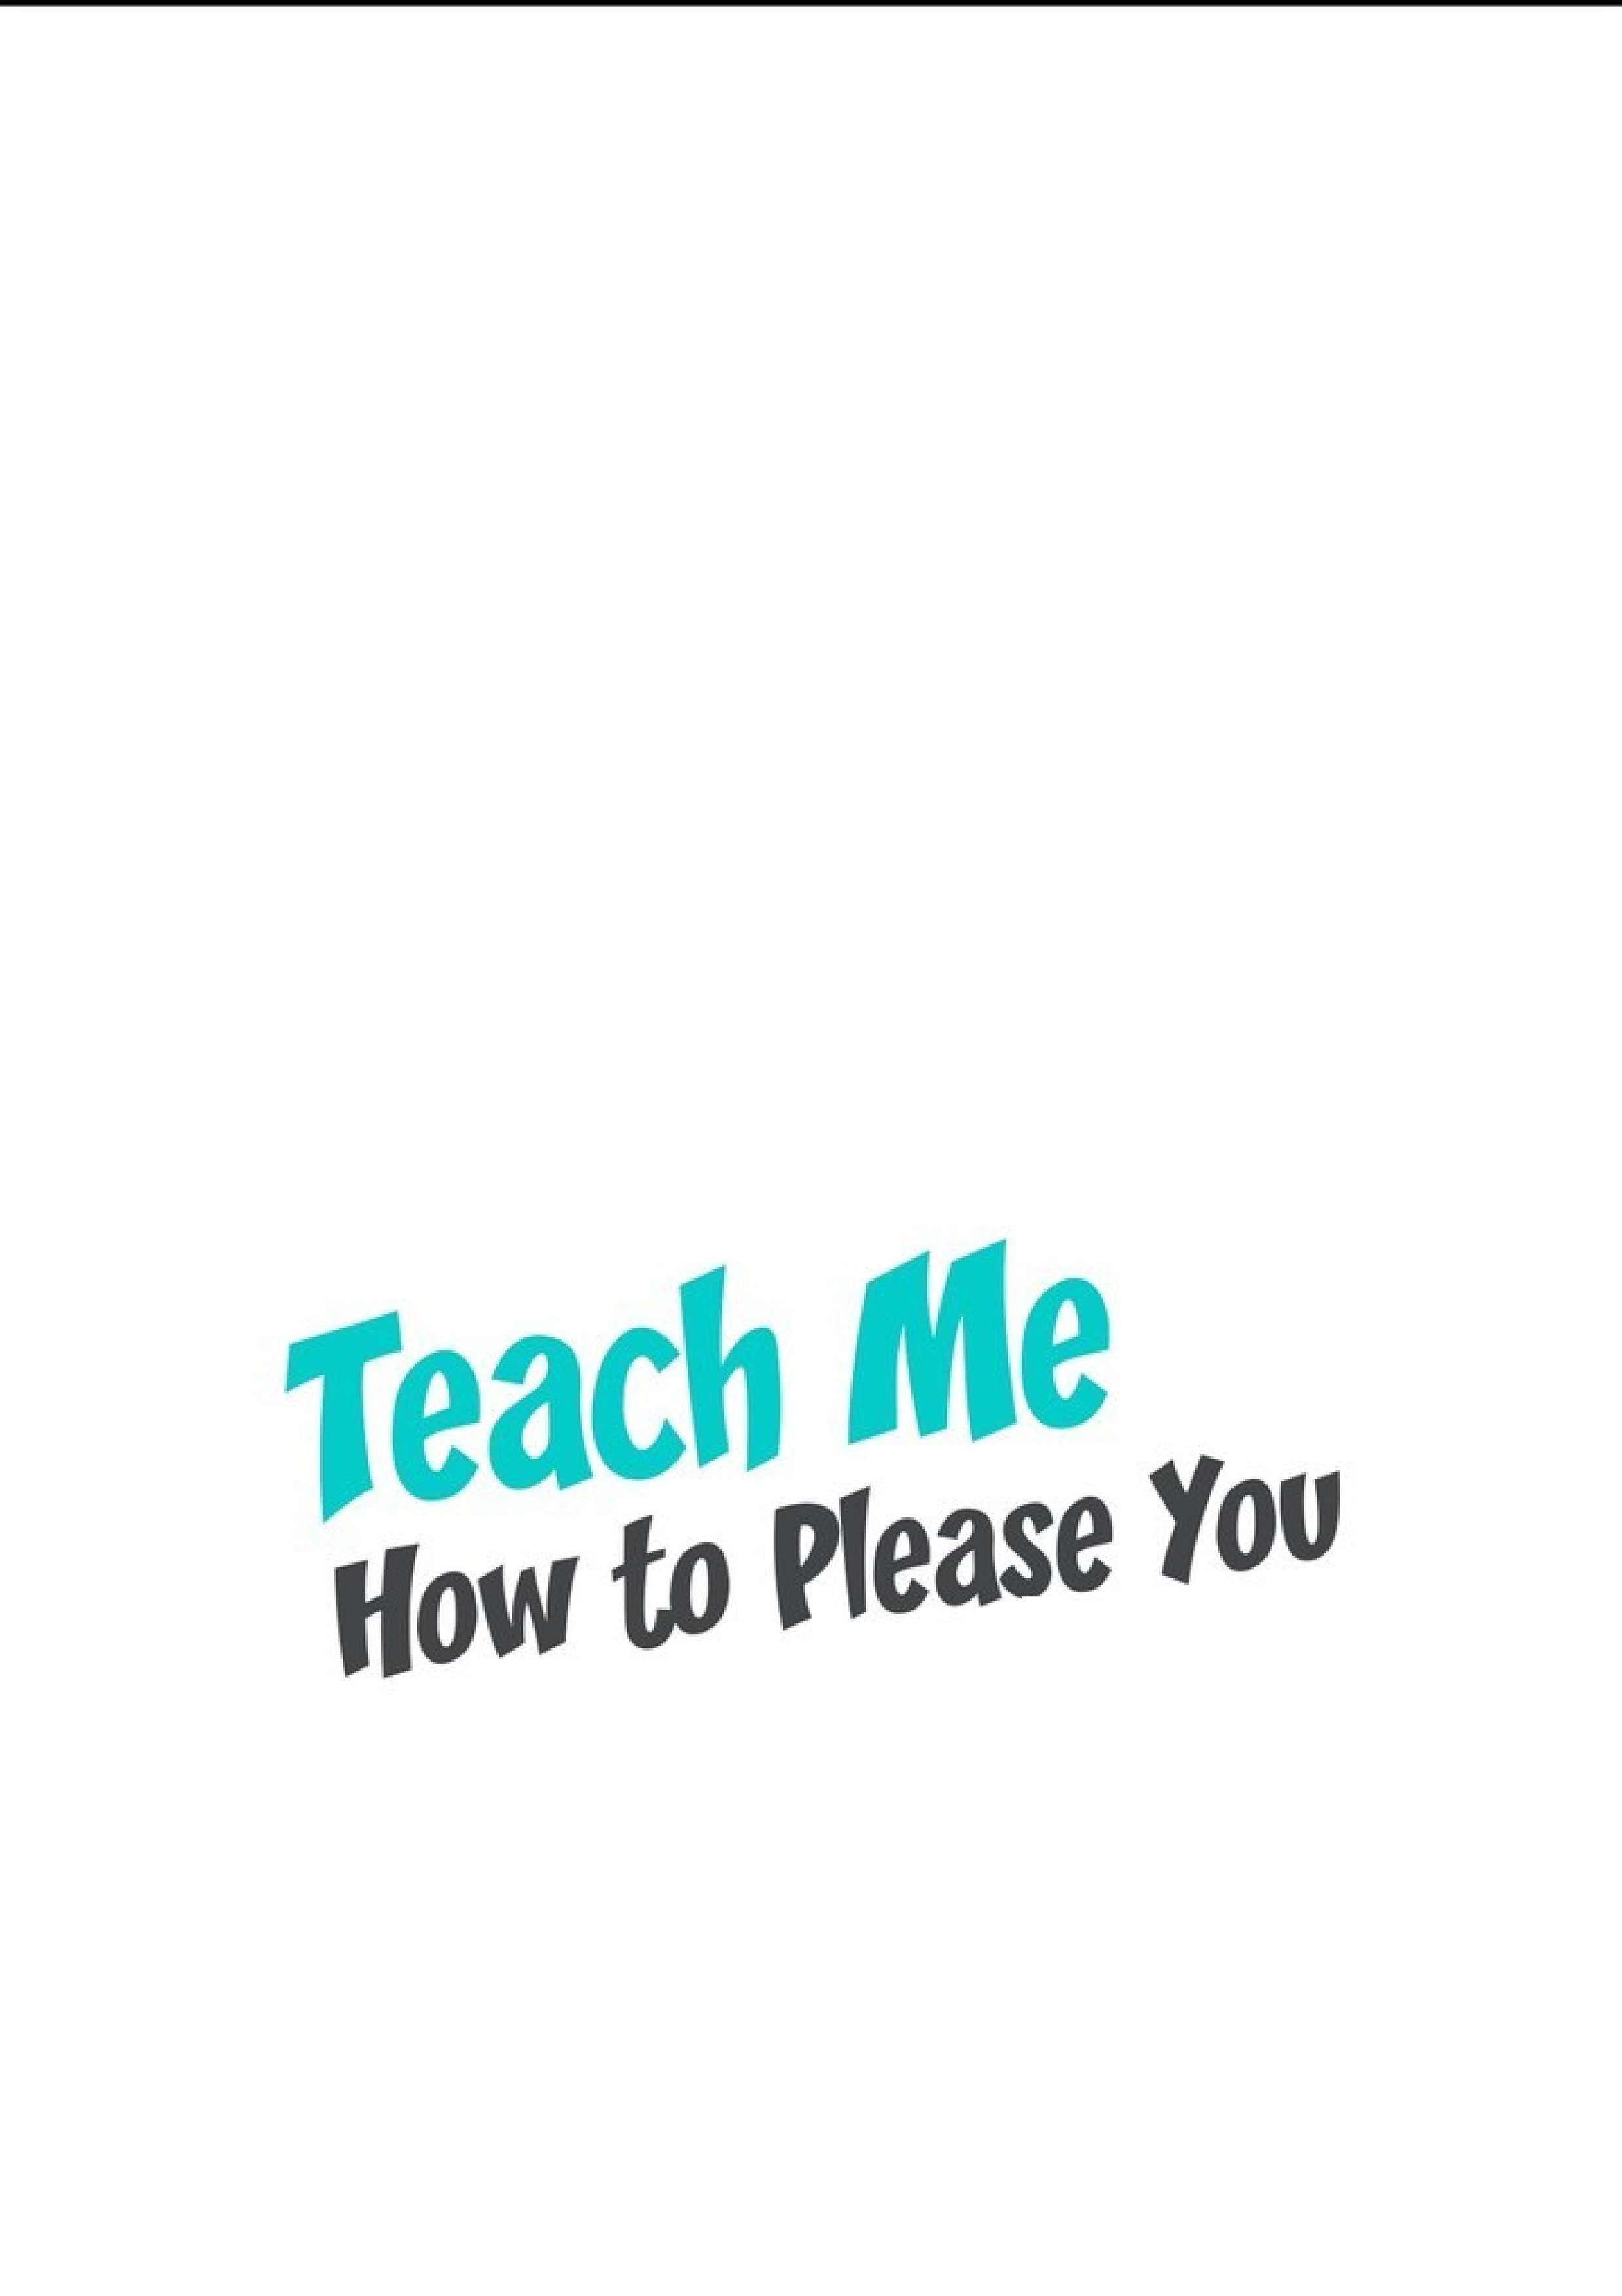 Teach Me How to Please You1 (20)